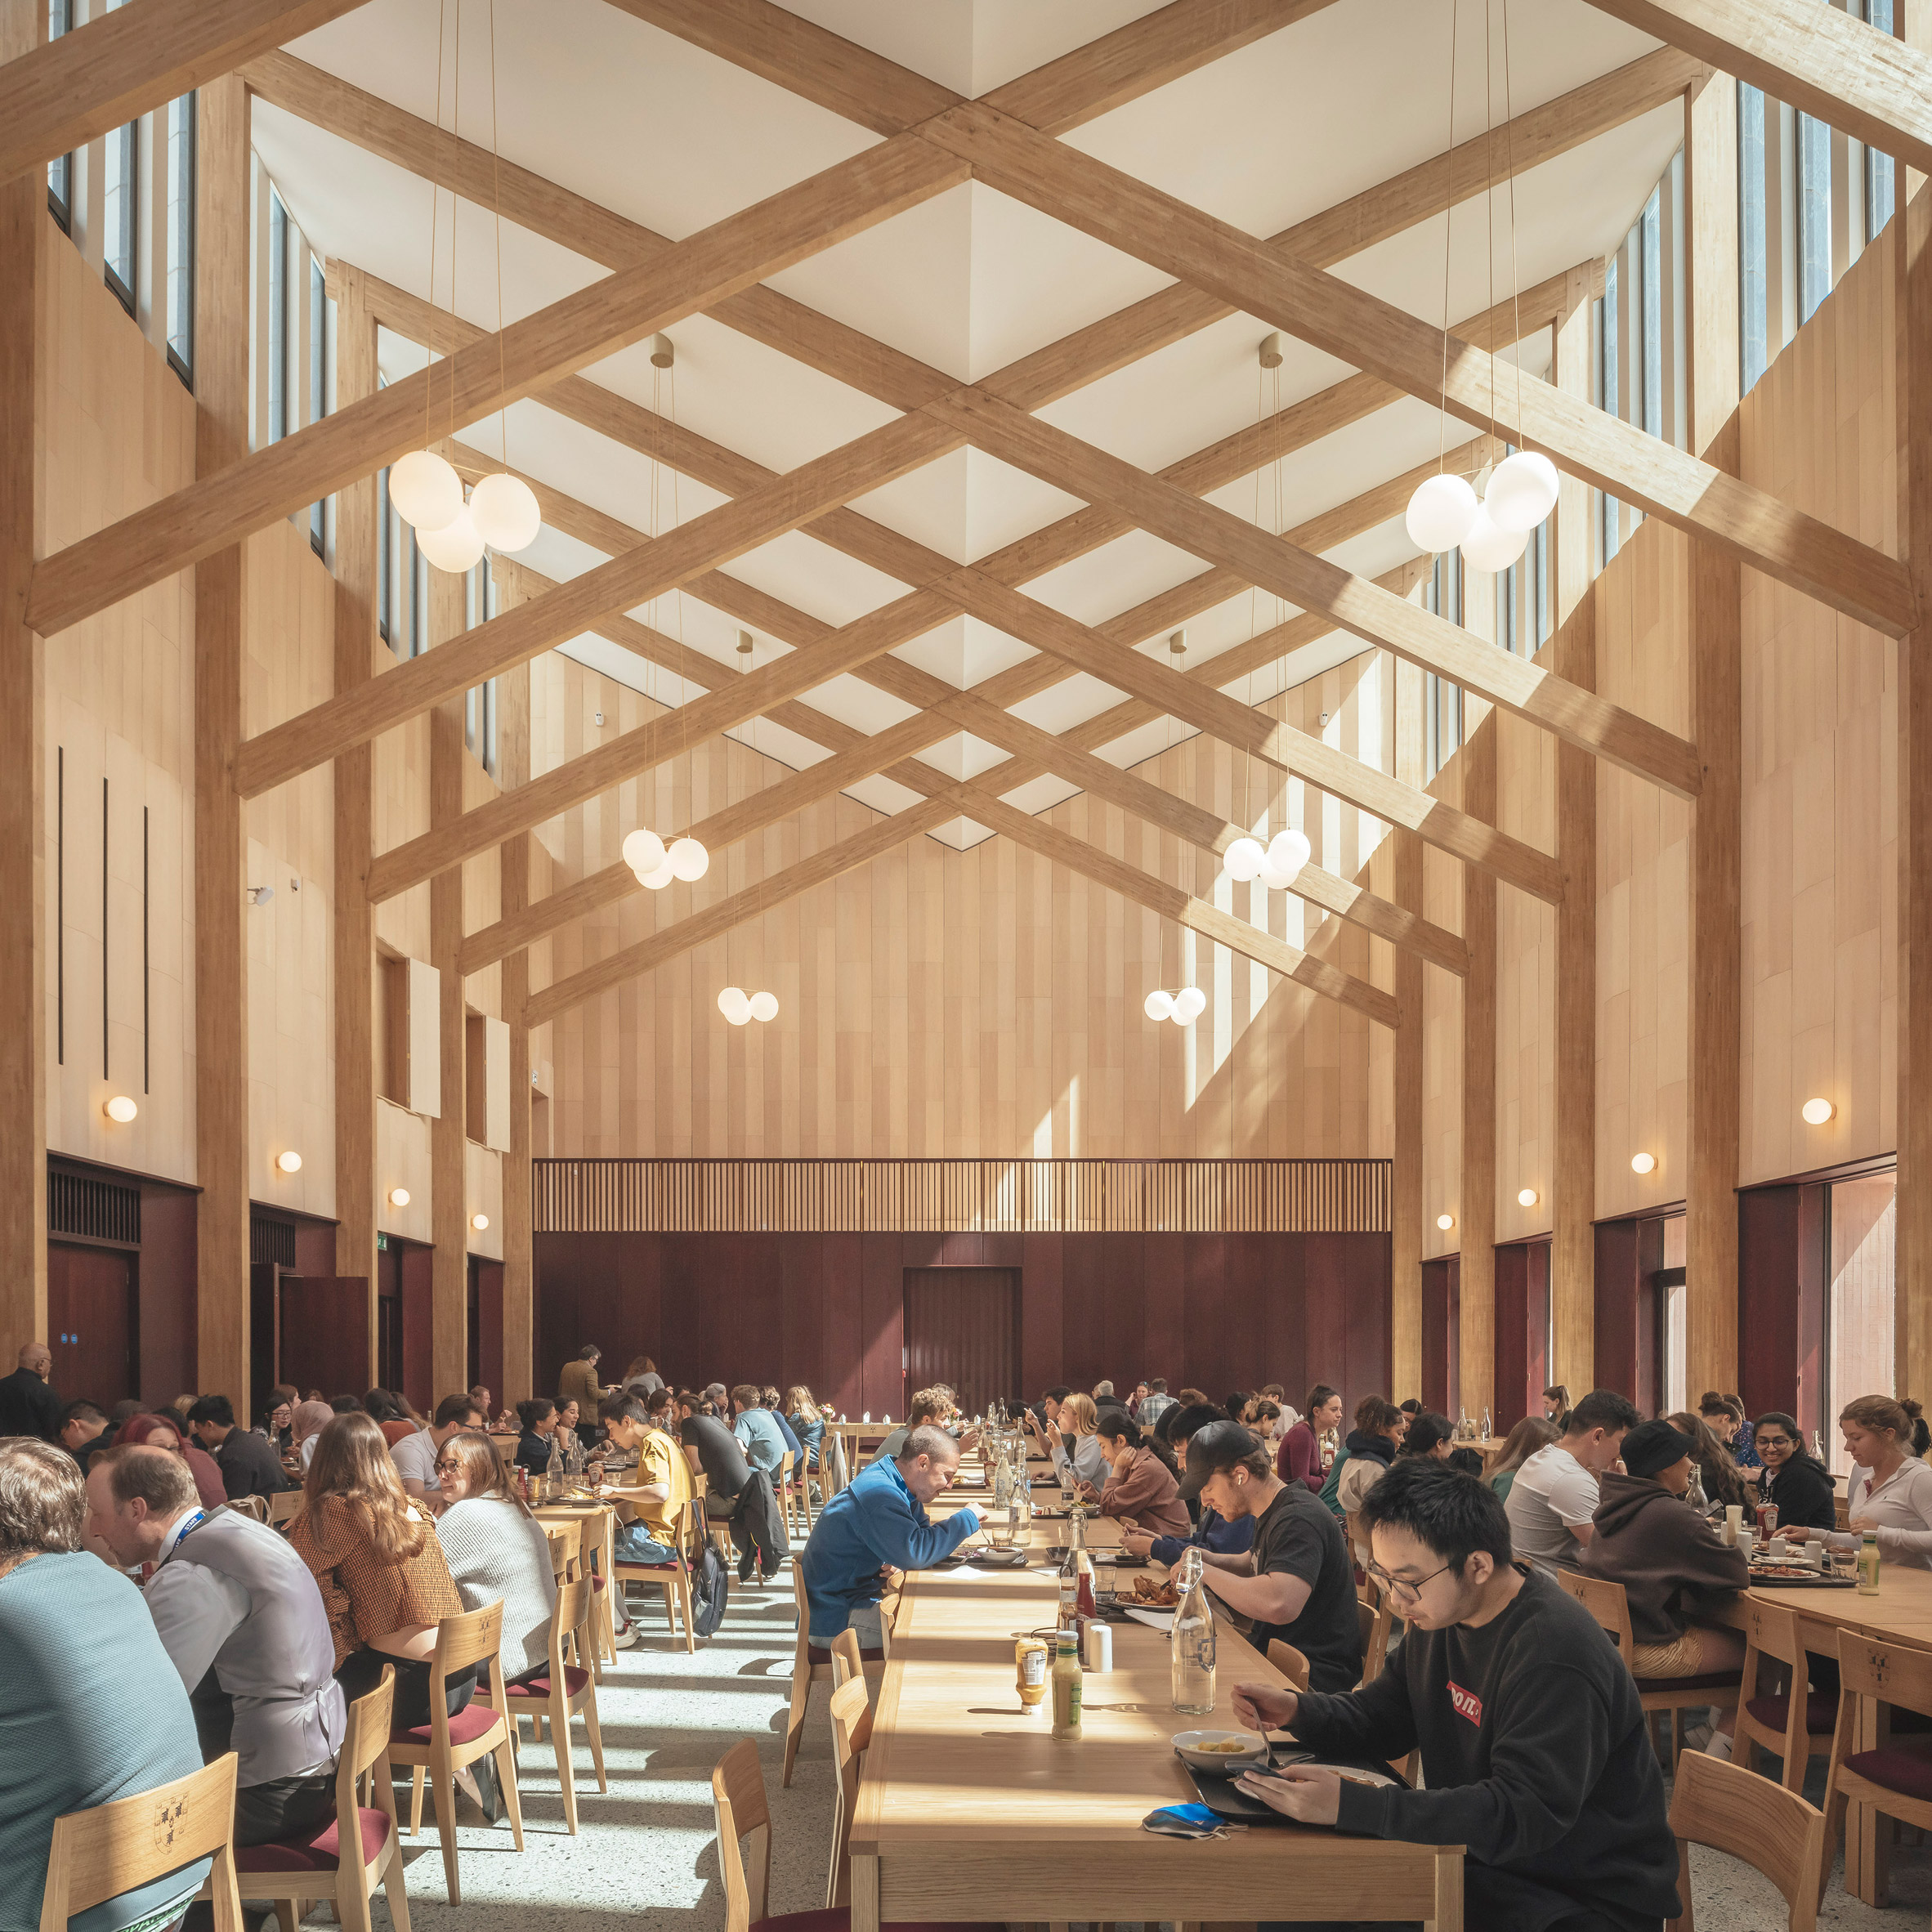 Interior if Cambridge University dining hall